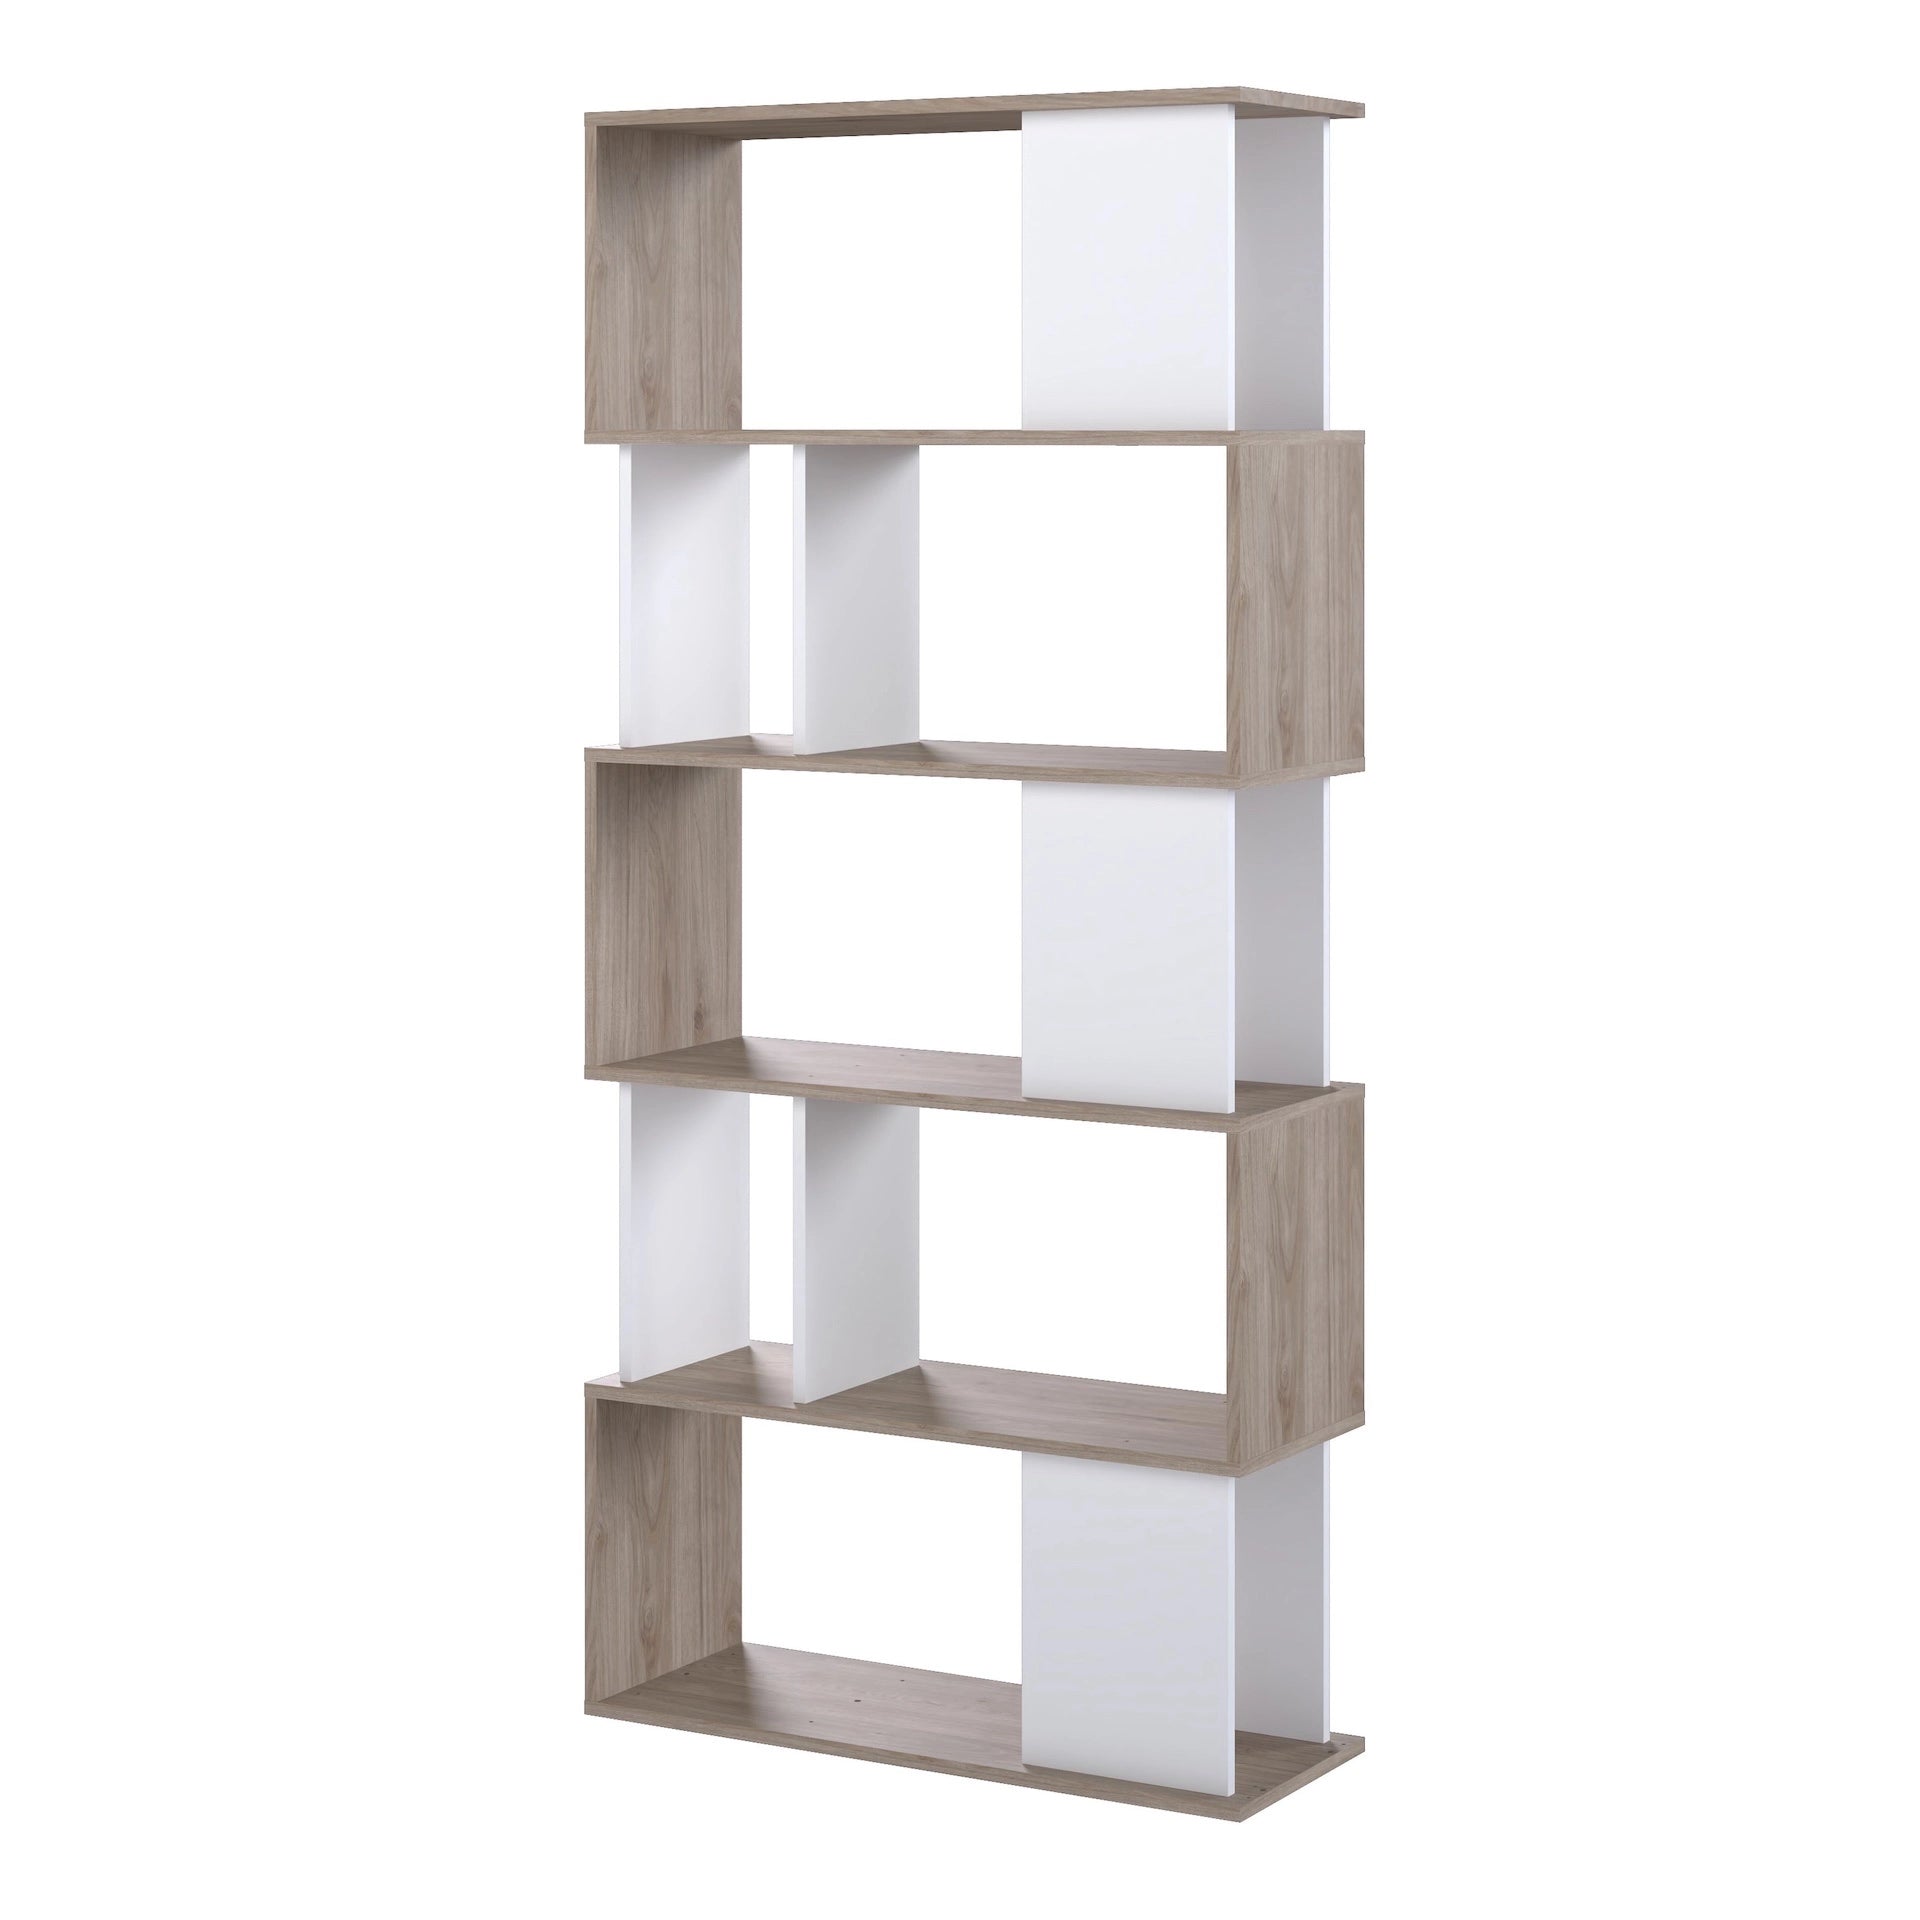 Furniture To Go Maze Open Bookcase 4 Shelves in Jackson Hickory Oak & White